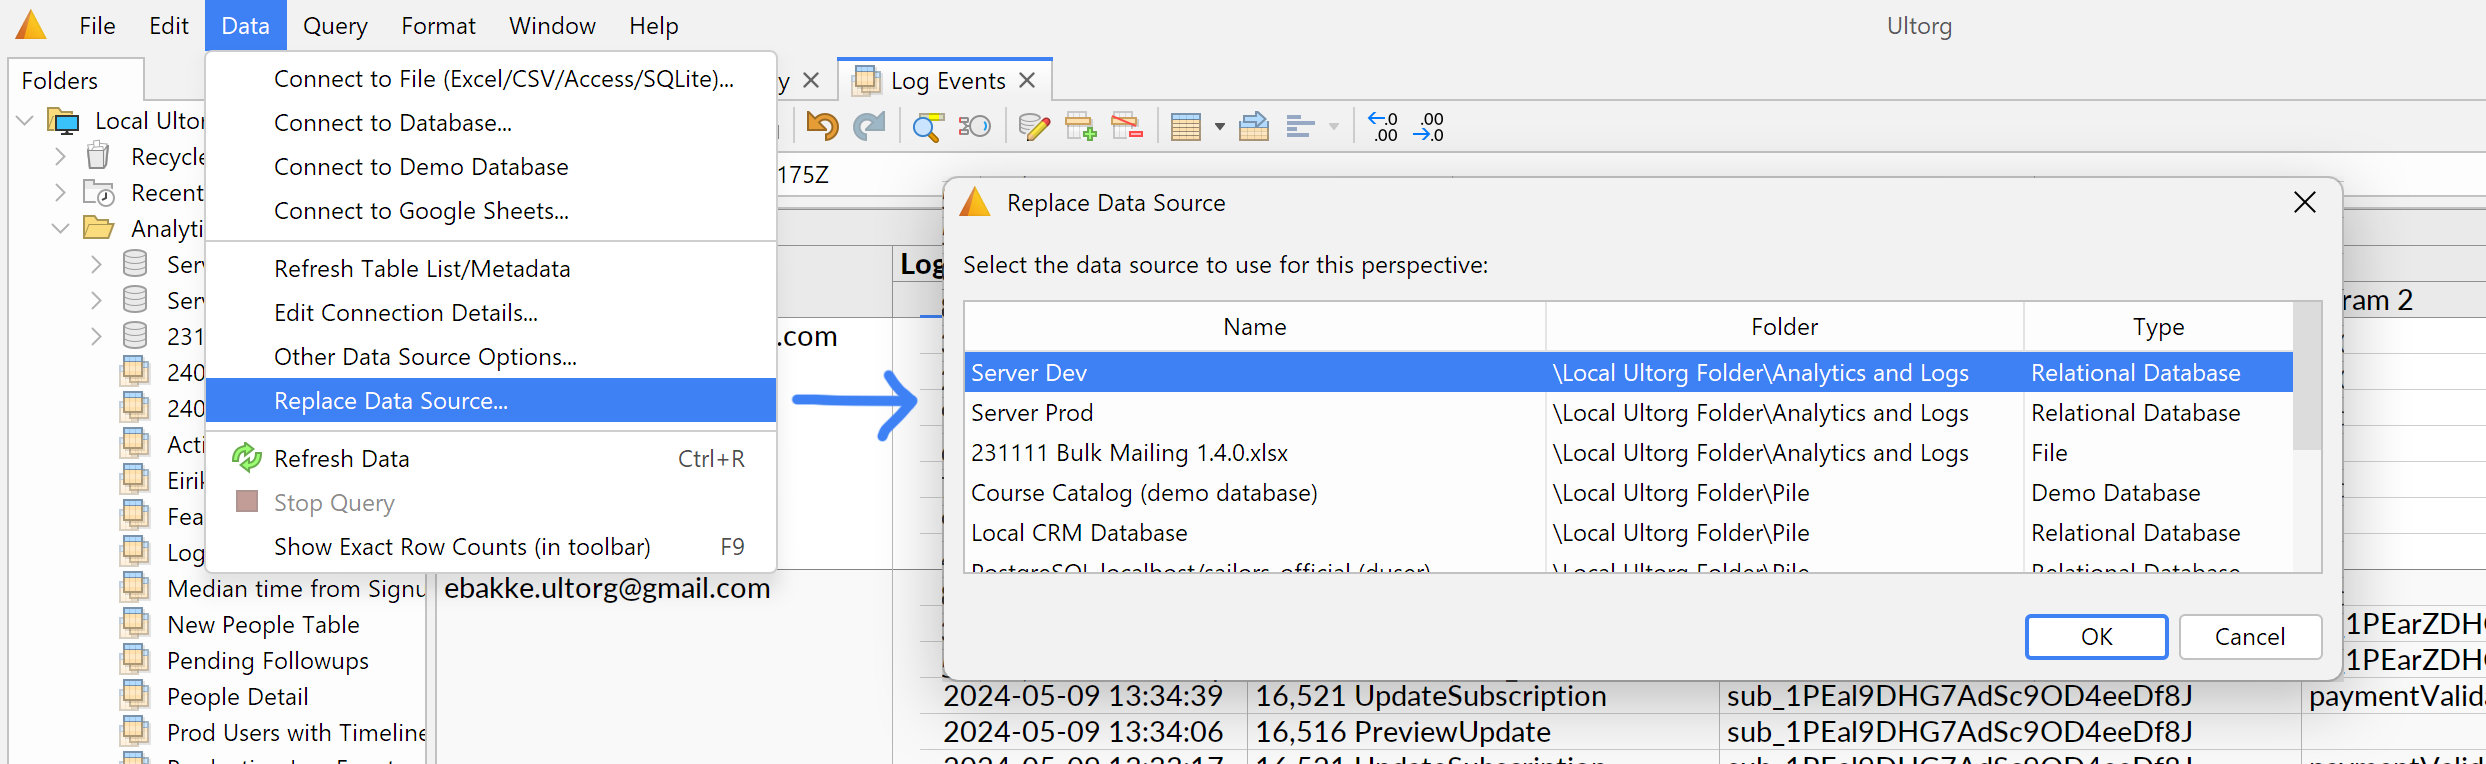 Screenshot of the Replace Data Source menu item and dialog box